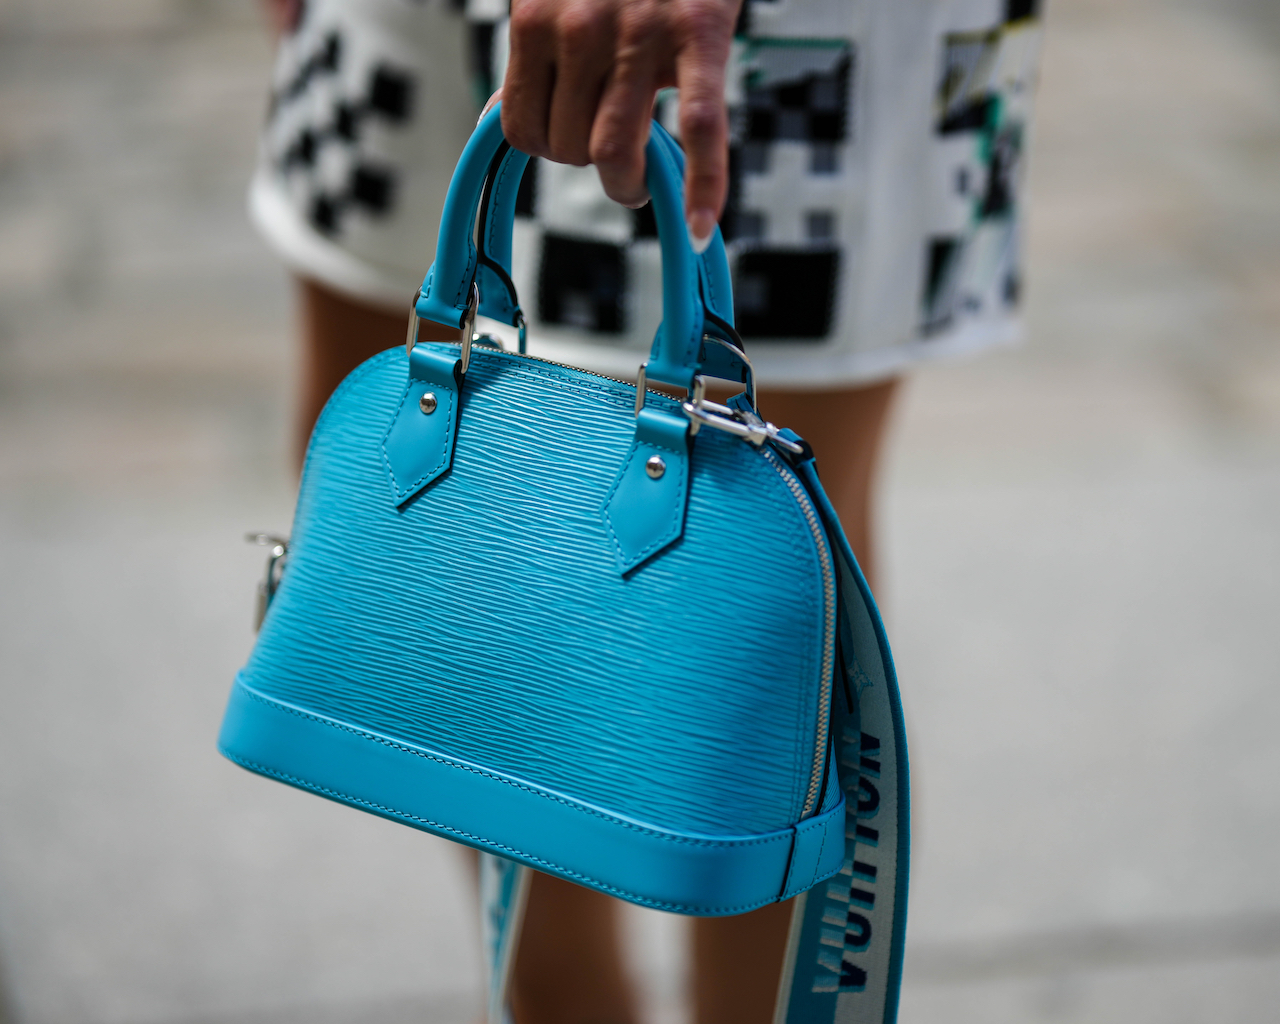 Louis Vuitton Speedy Handbags: Timeless Elegance and Style